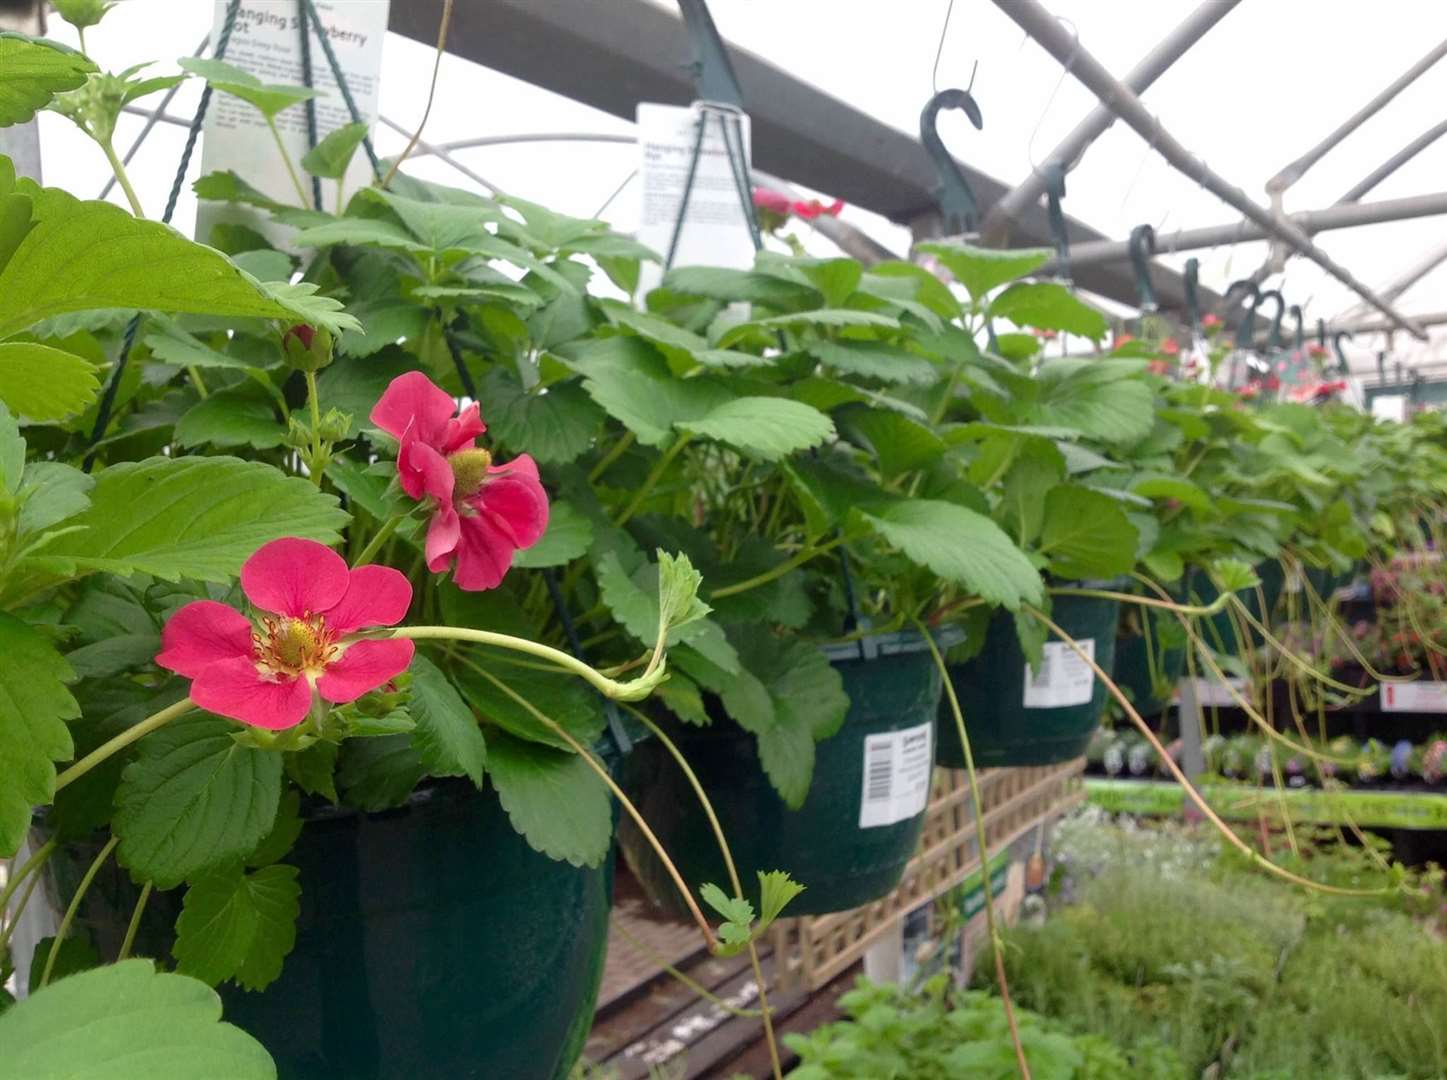 Growing strawberries in hanging baskets will keep the slugs away.